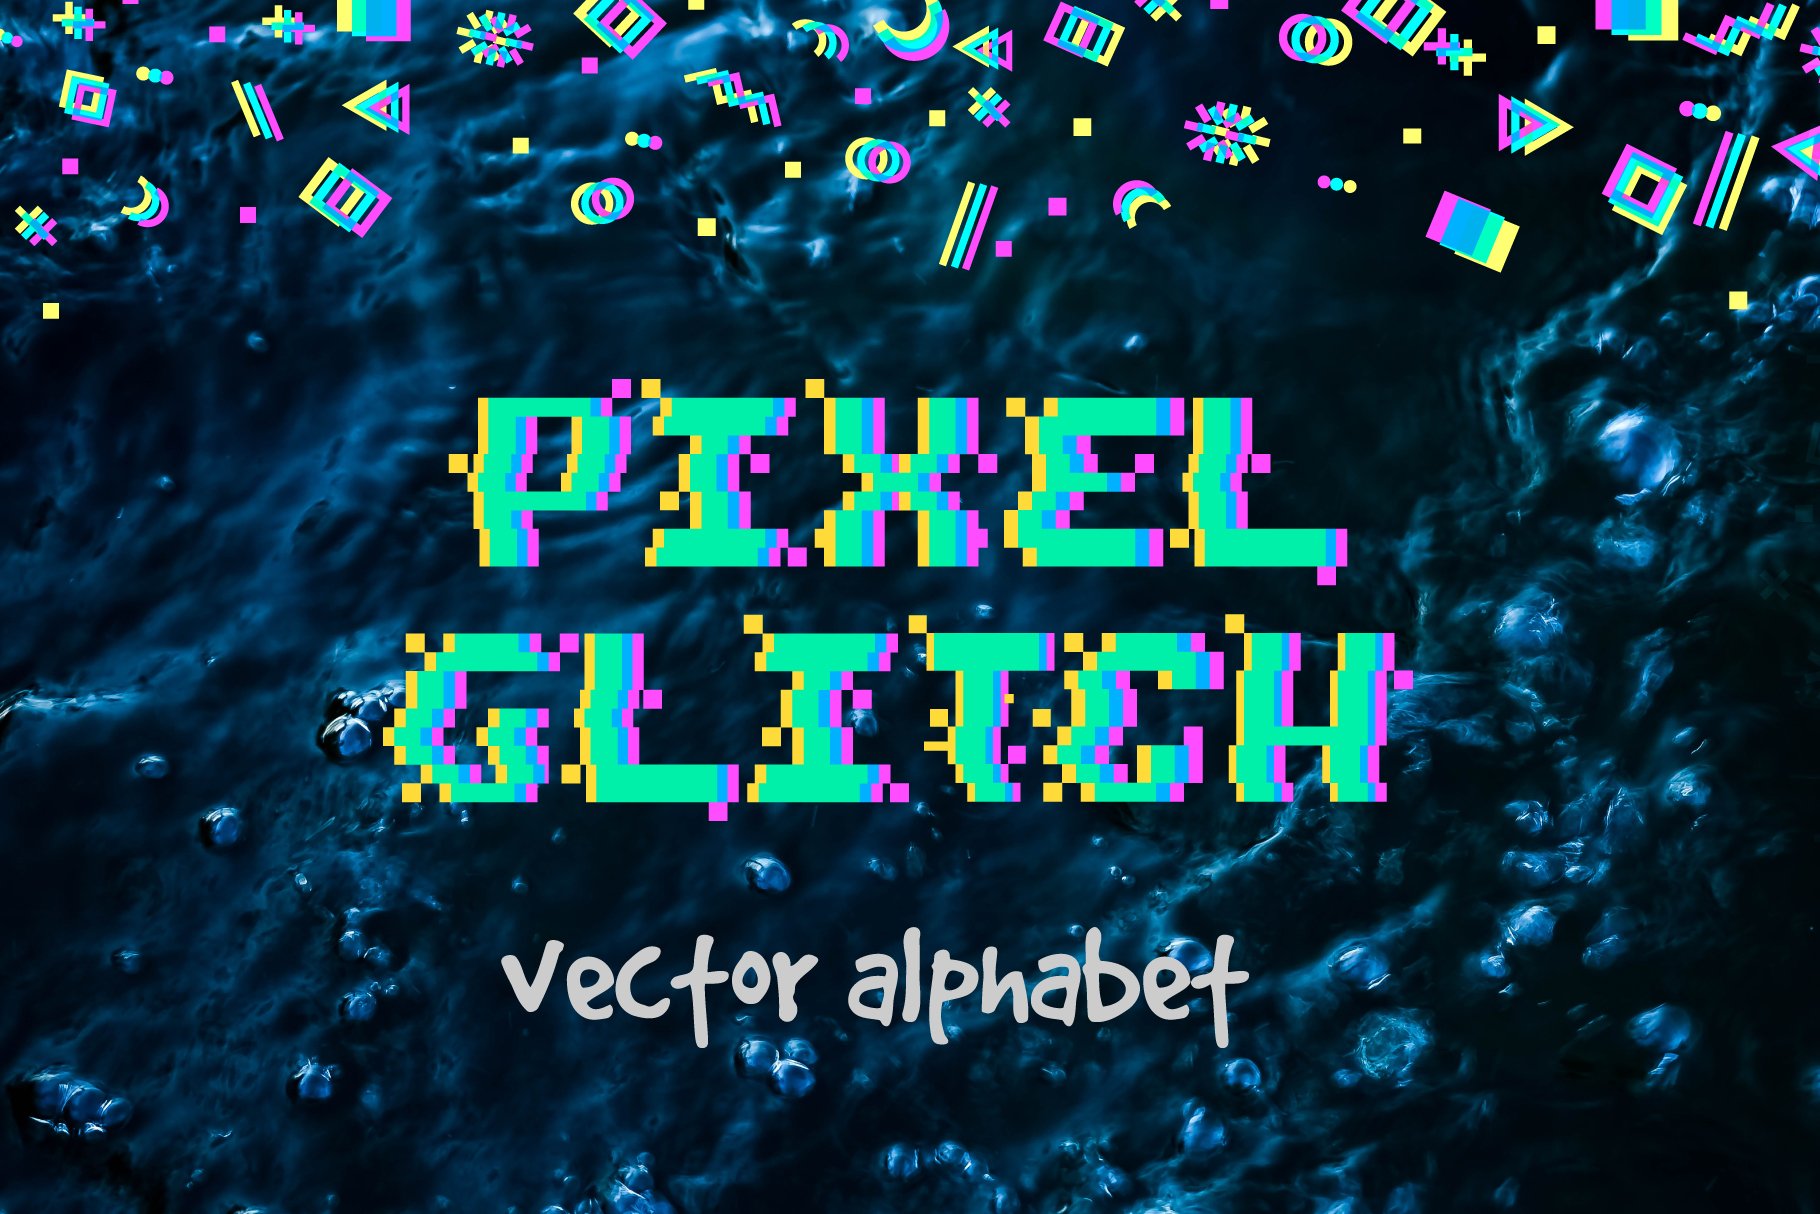 PIXEL GLITCH vector alphabet cover image.